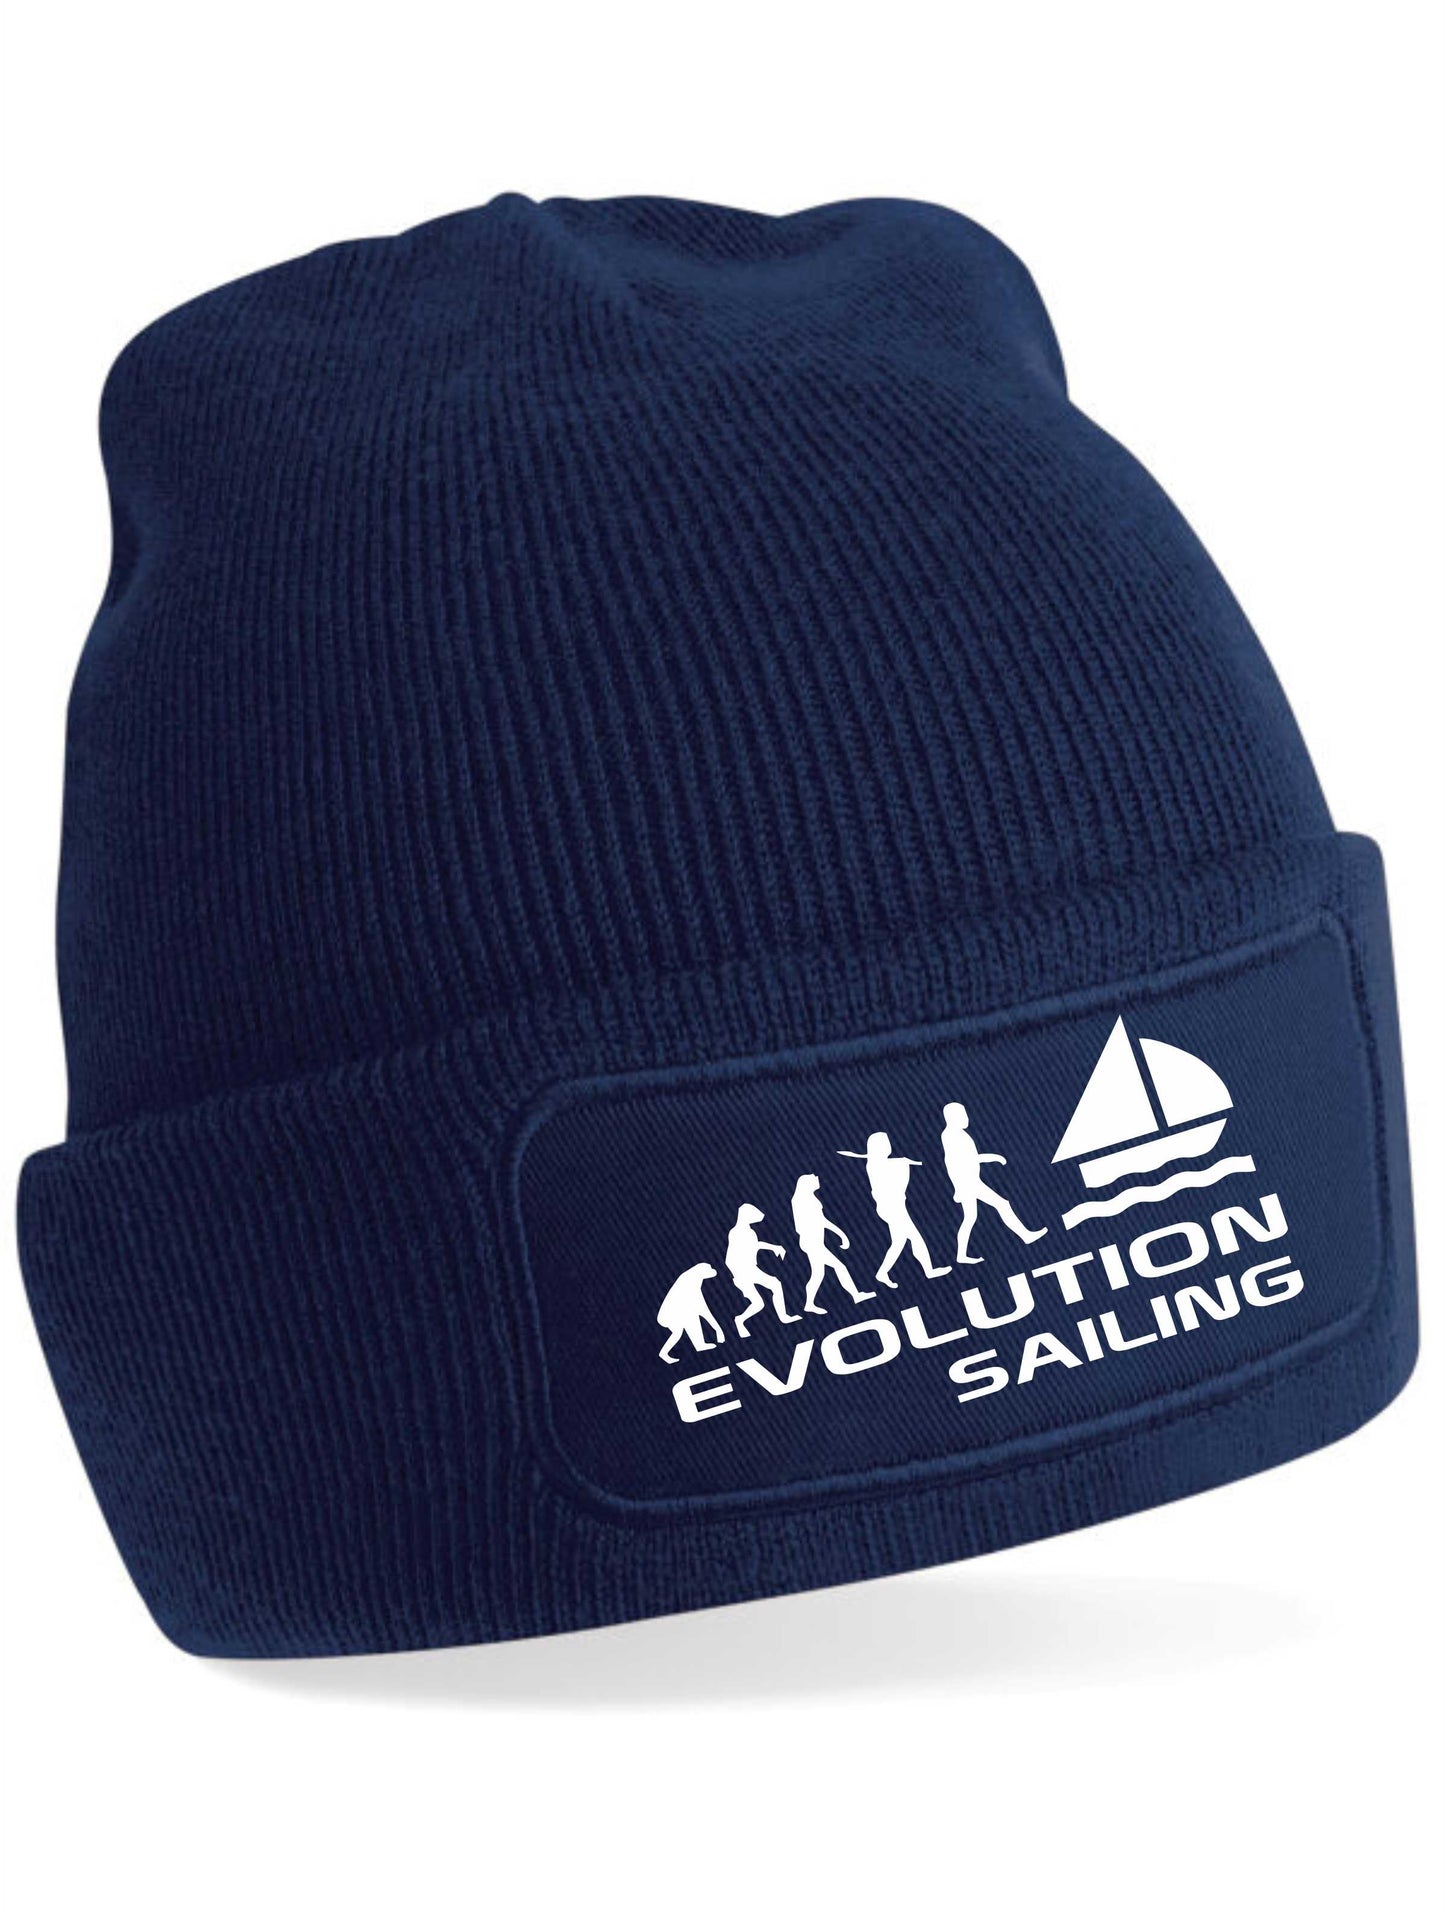 Evolution Of Sailing Beanie Hat Sport Hobby Birthday Gift For Men & Ladies